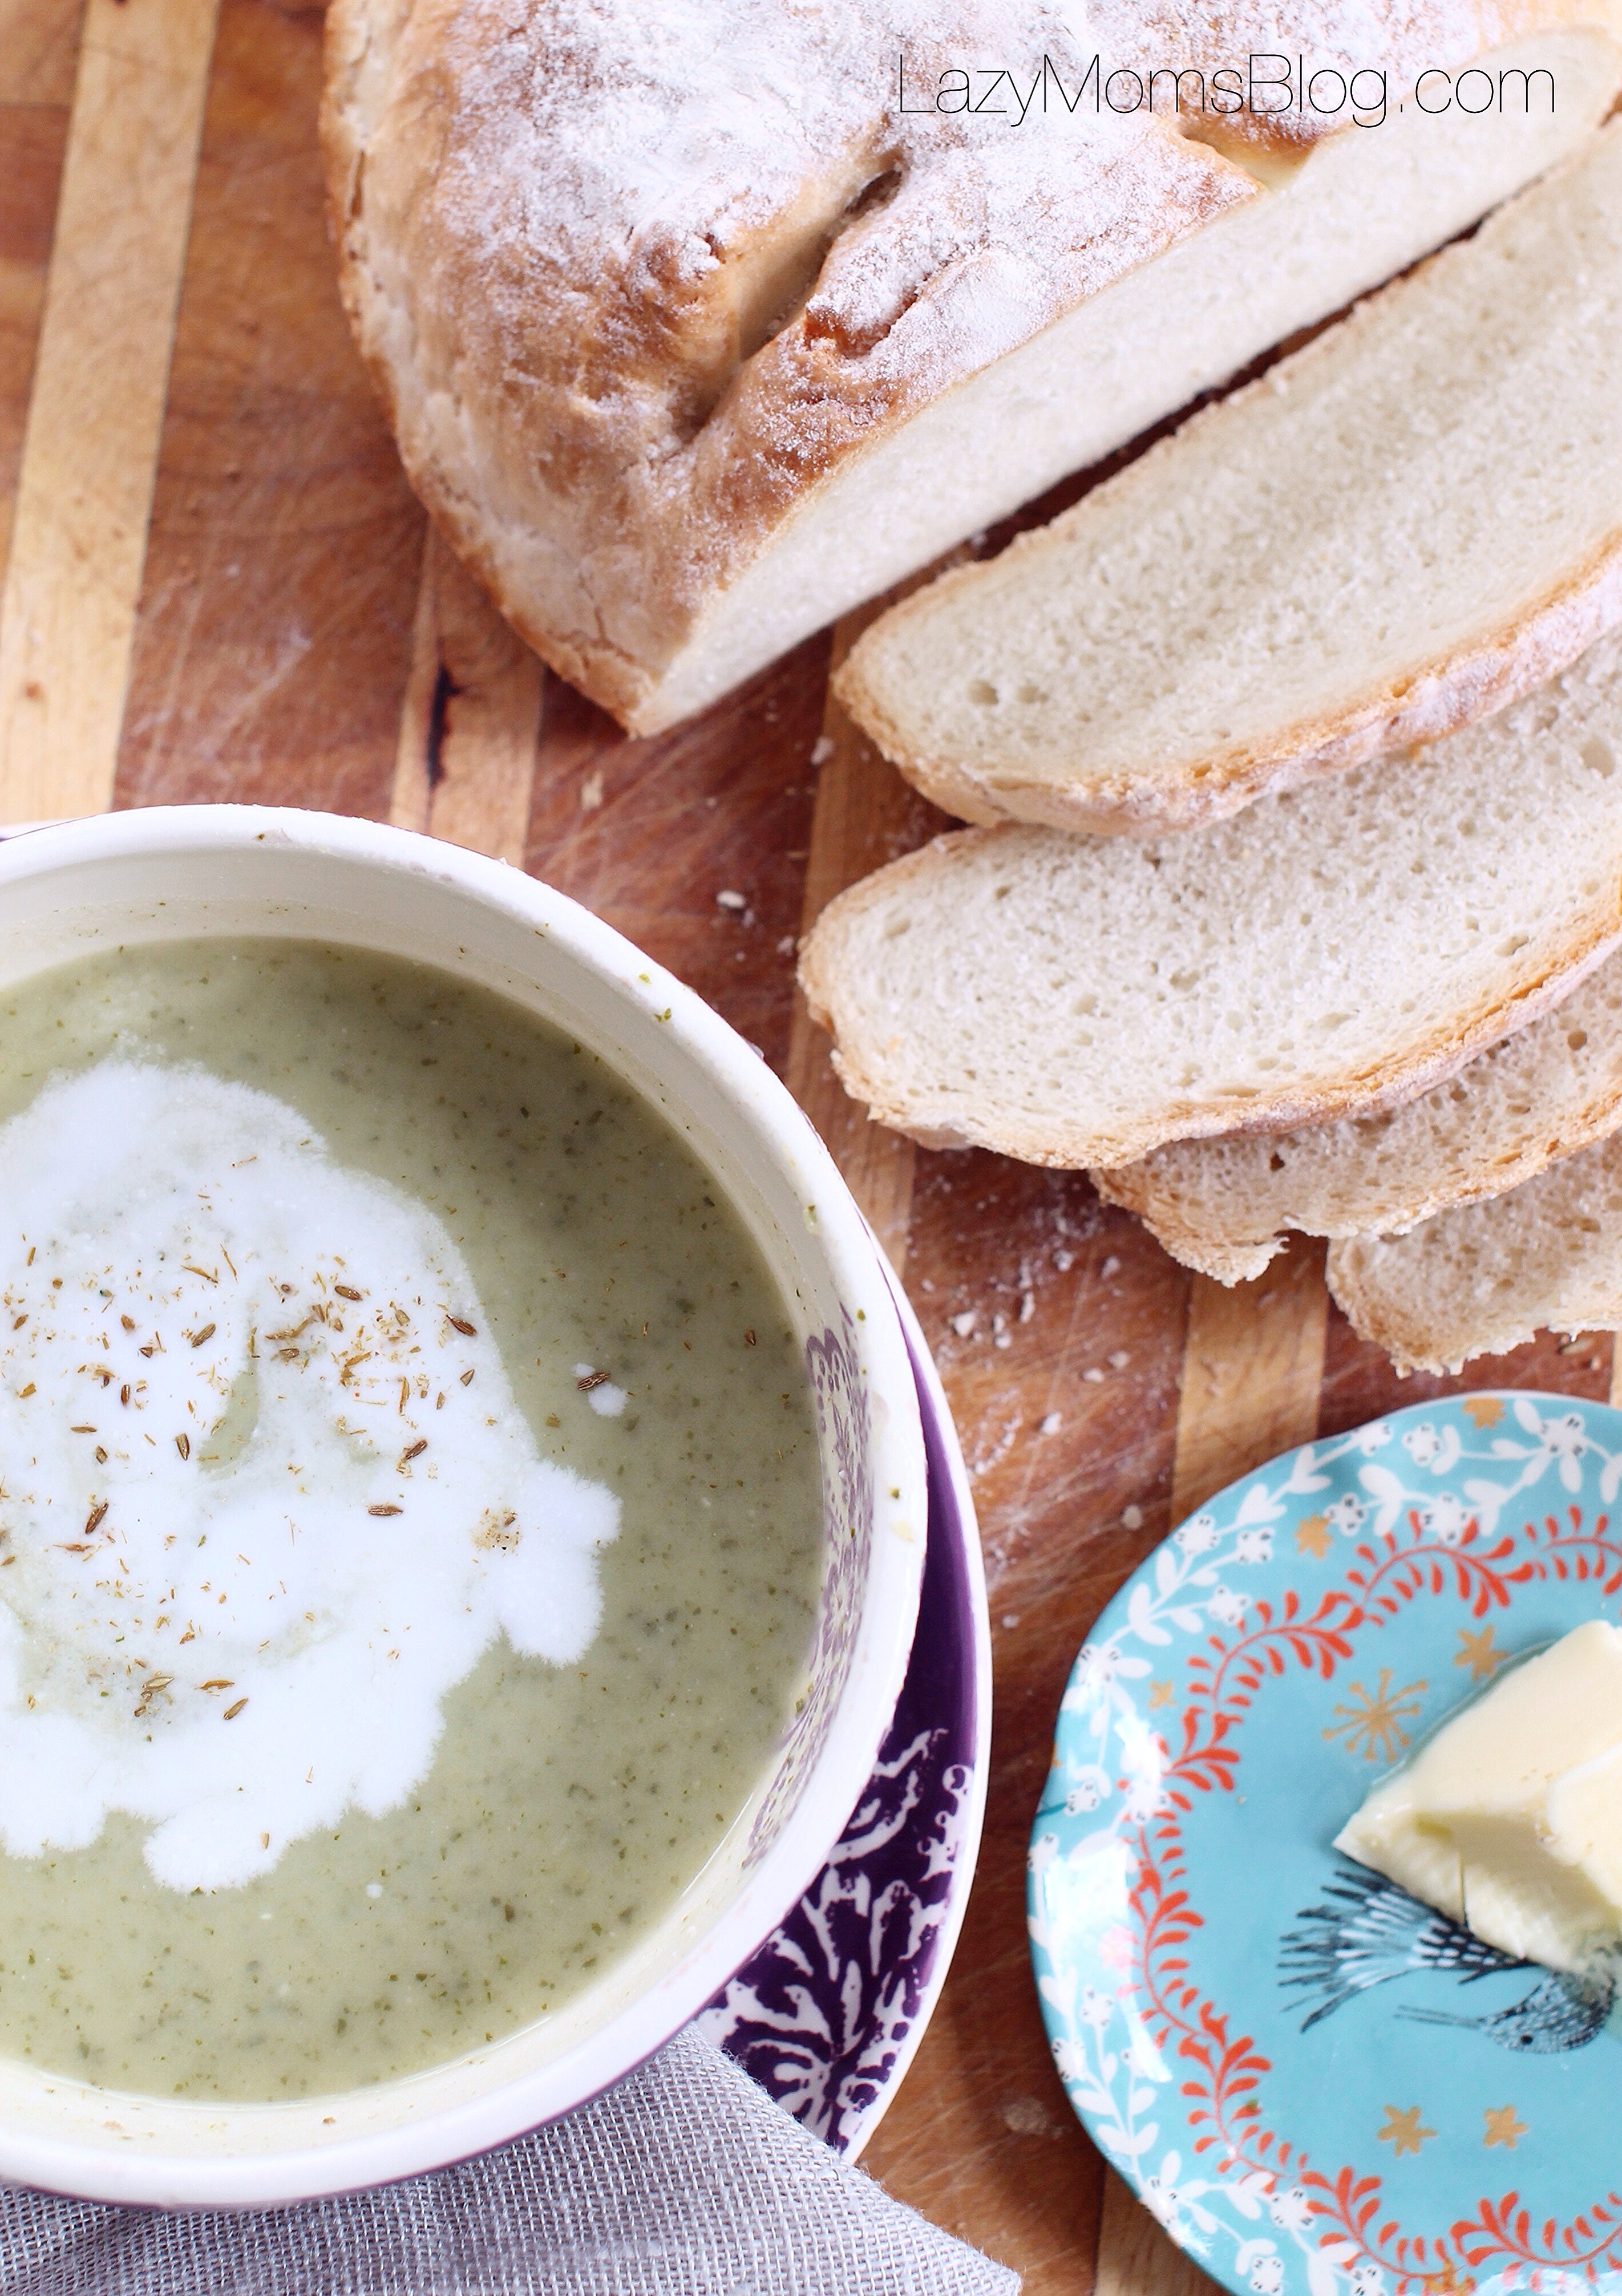 Creamy green soup